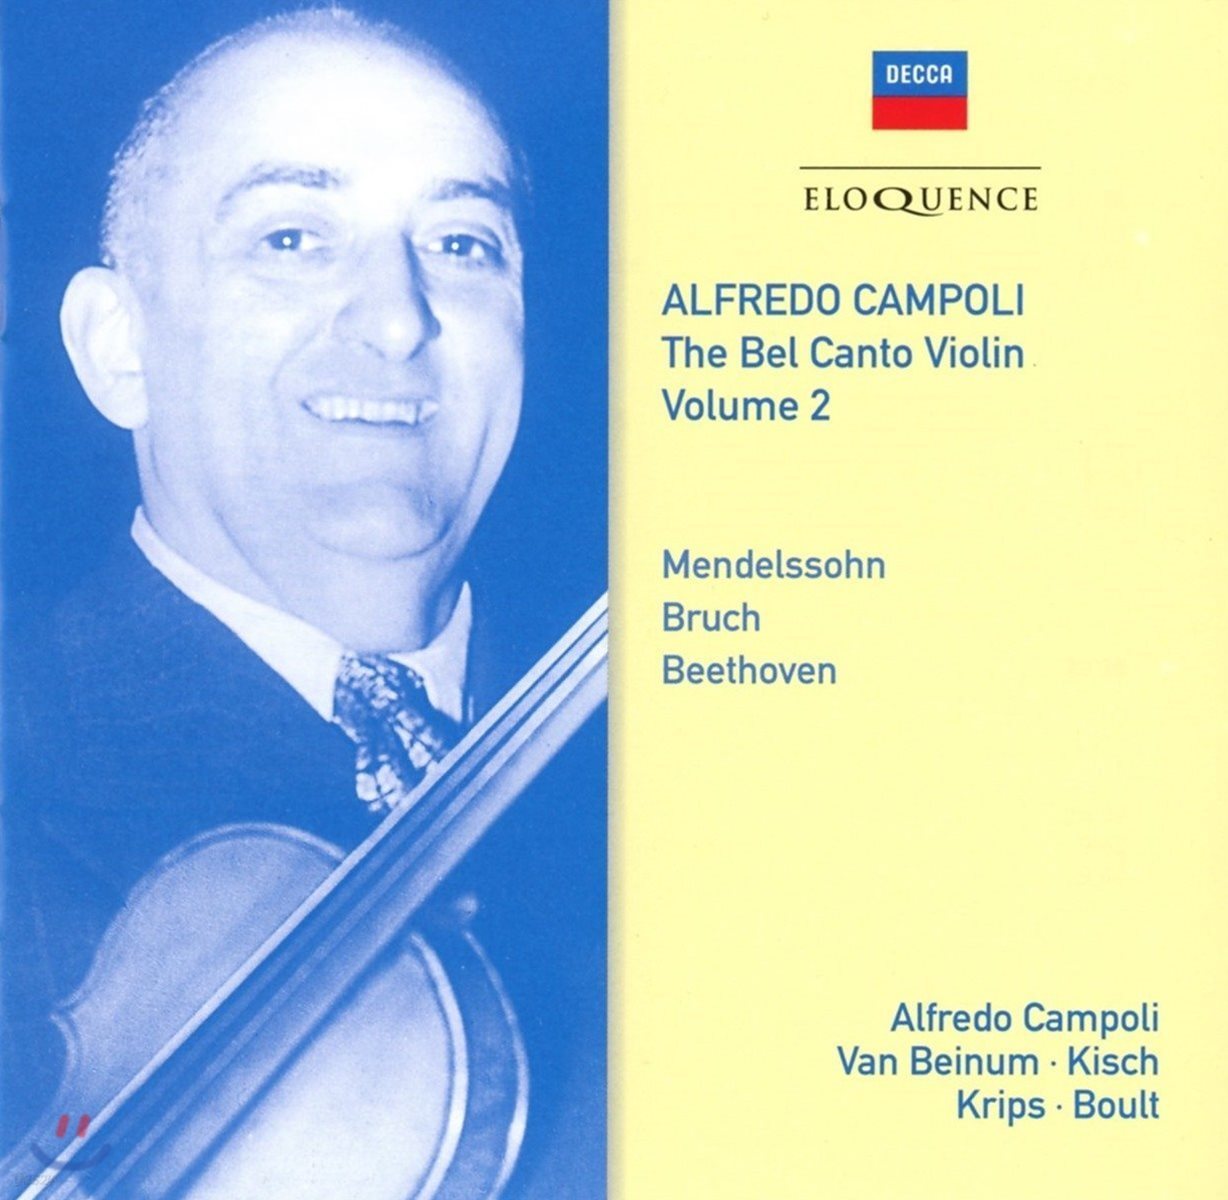 Alfredo Campoli 알프레도 캄폴리 벨 칸토 바이올린 2집 - 협주곡: 멘델스존 / 브루흐 / 베토벤